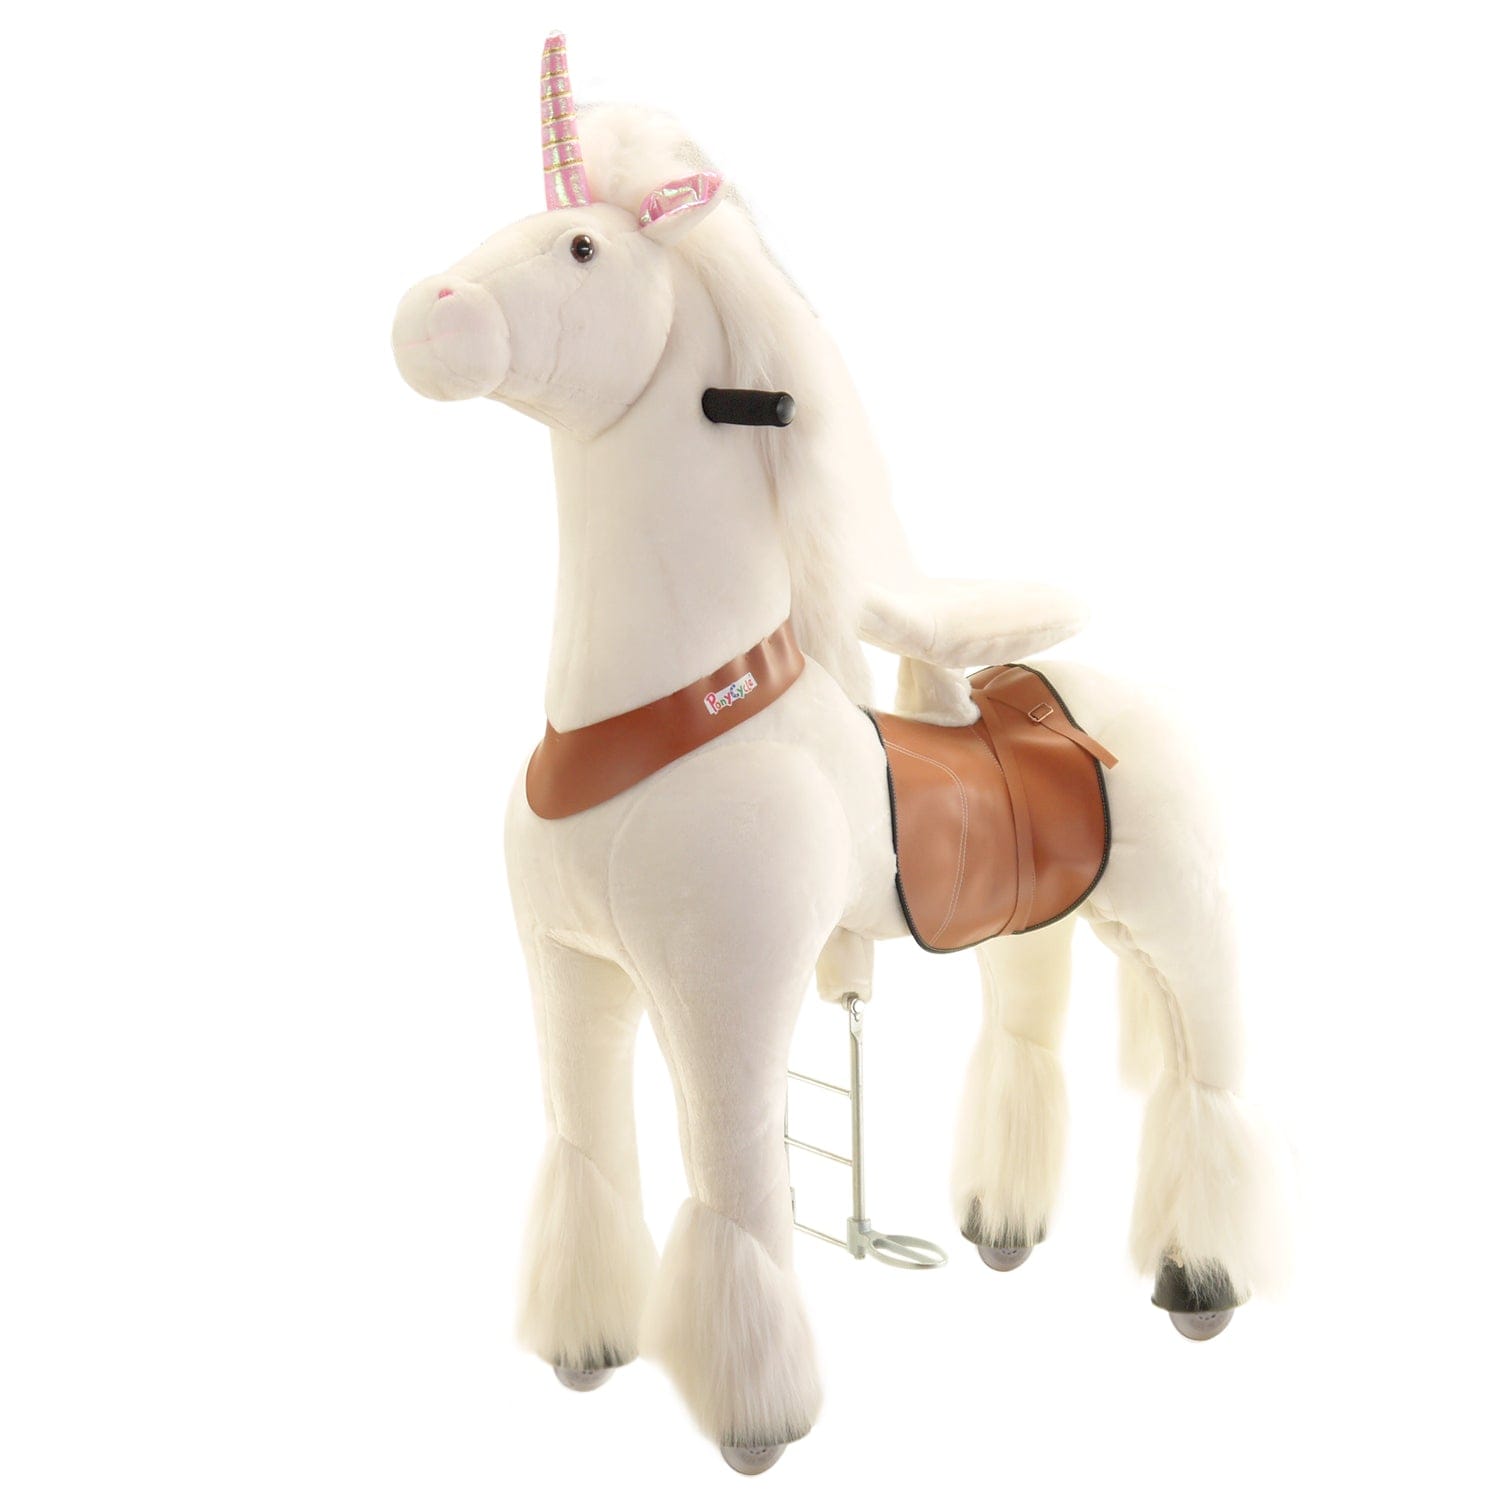 PonyCycle, Inc. Unicorn Large Size for Age 10 to Adult- Exhibition sample